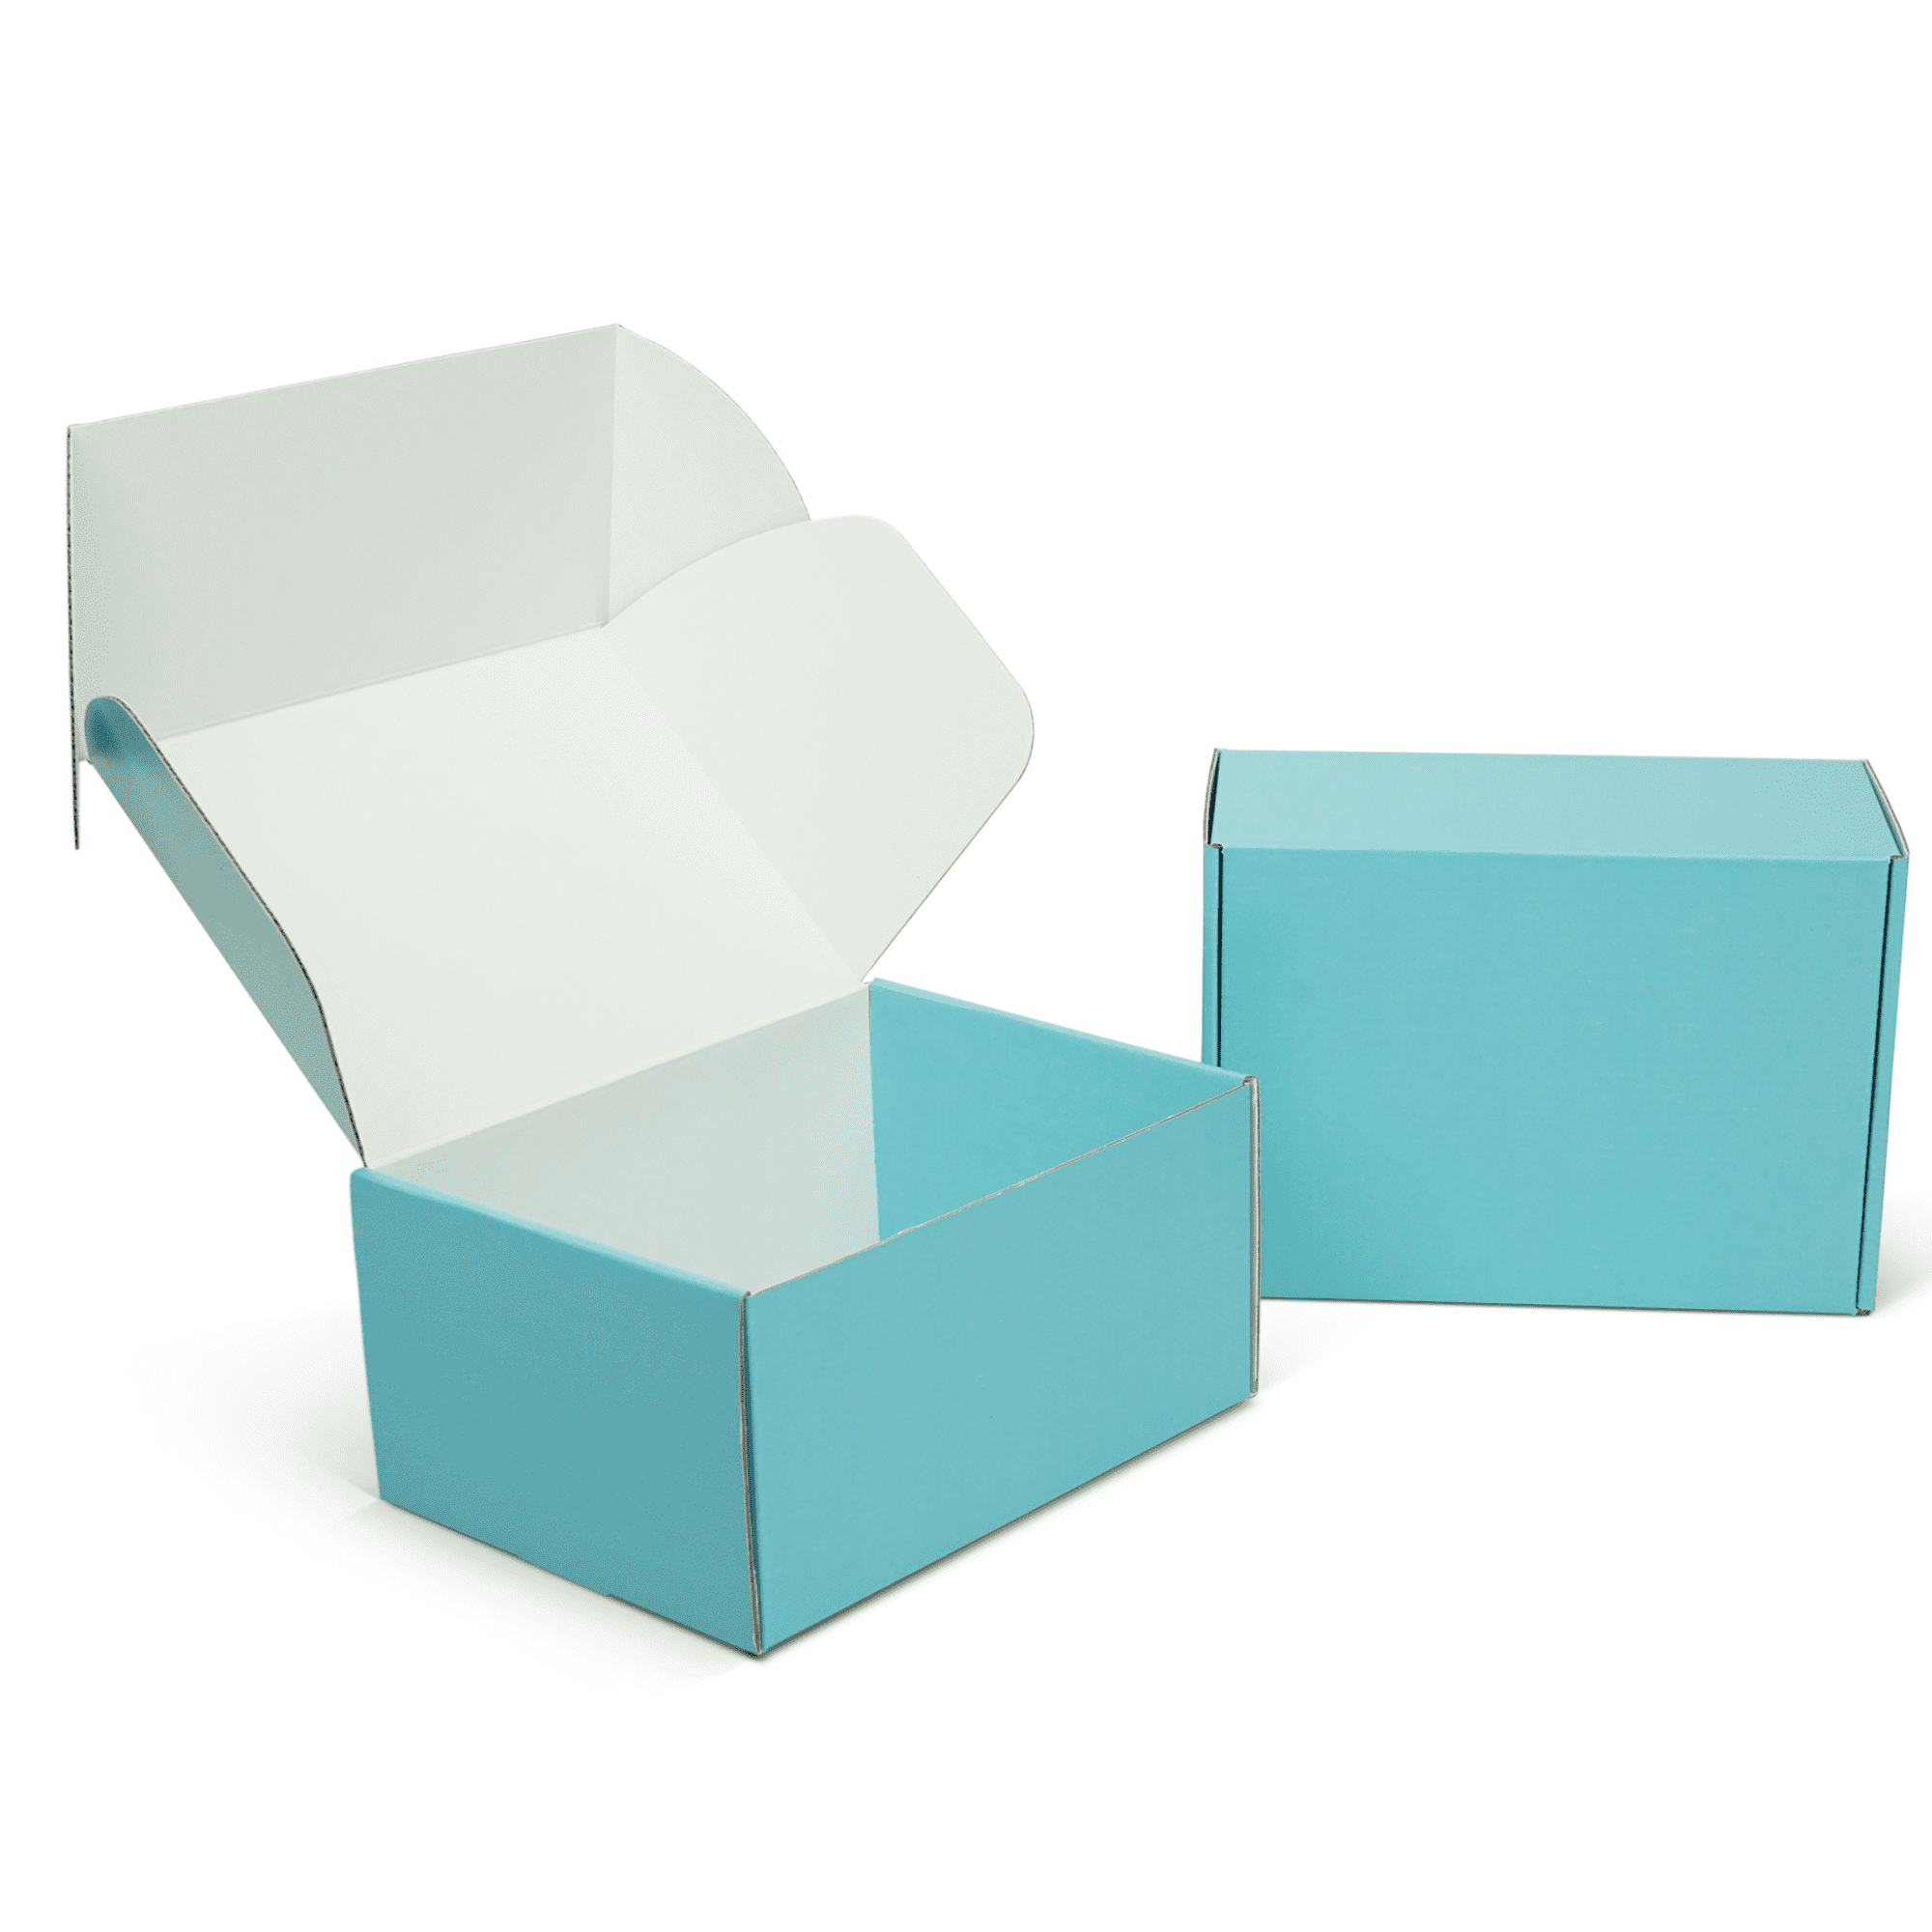 Zeemeeuw Alvast Pornografie Teal Shipping Boxes | 8" x 6" x 4" Teal Shipping Box | Teal Gift Box |  Bundle of 20 Mailer Boxes by Fantastapack - Walmart.com